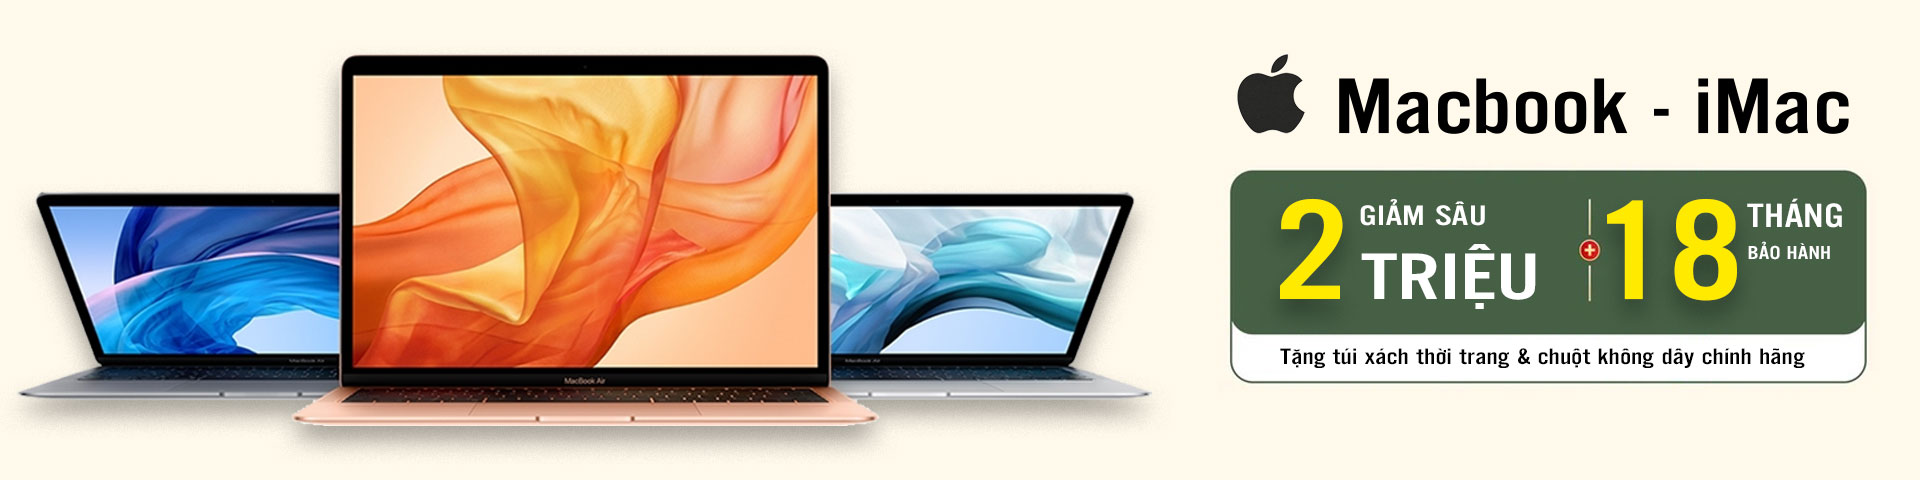 Apple Macbook - iMac